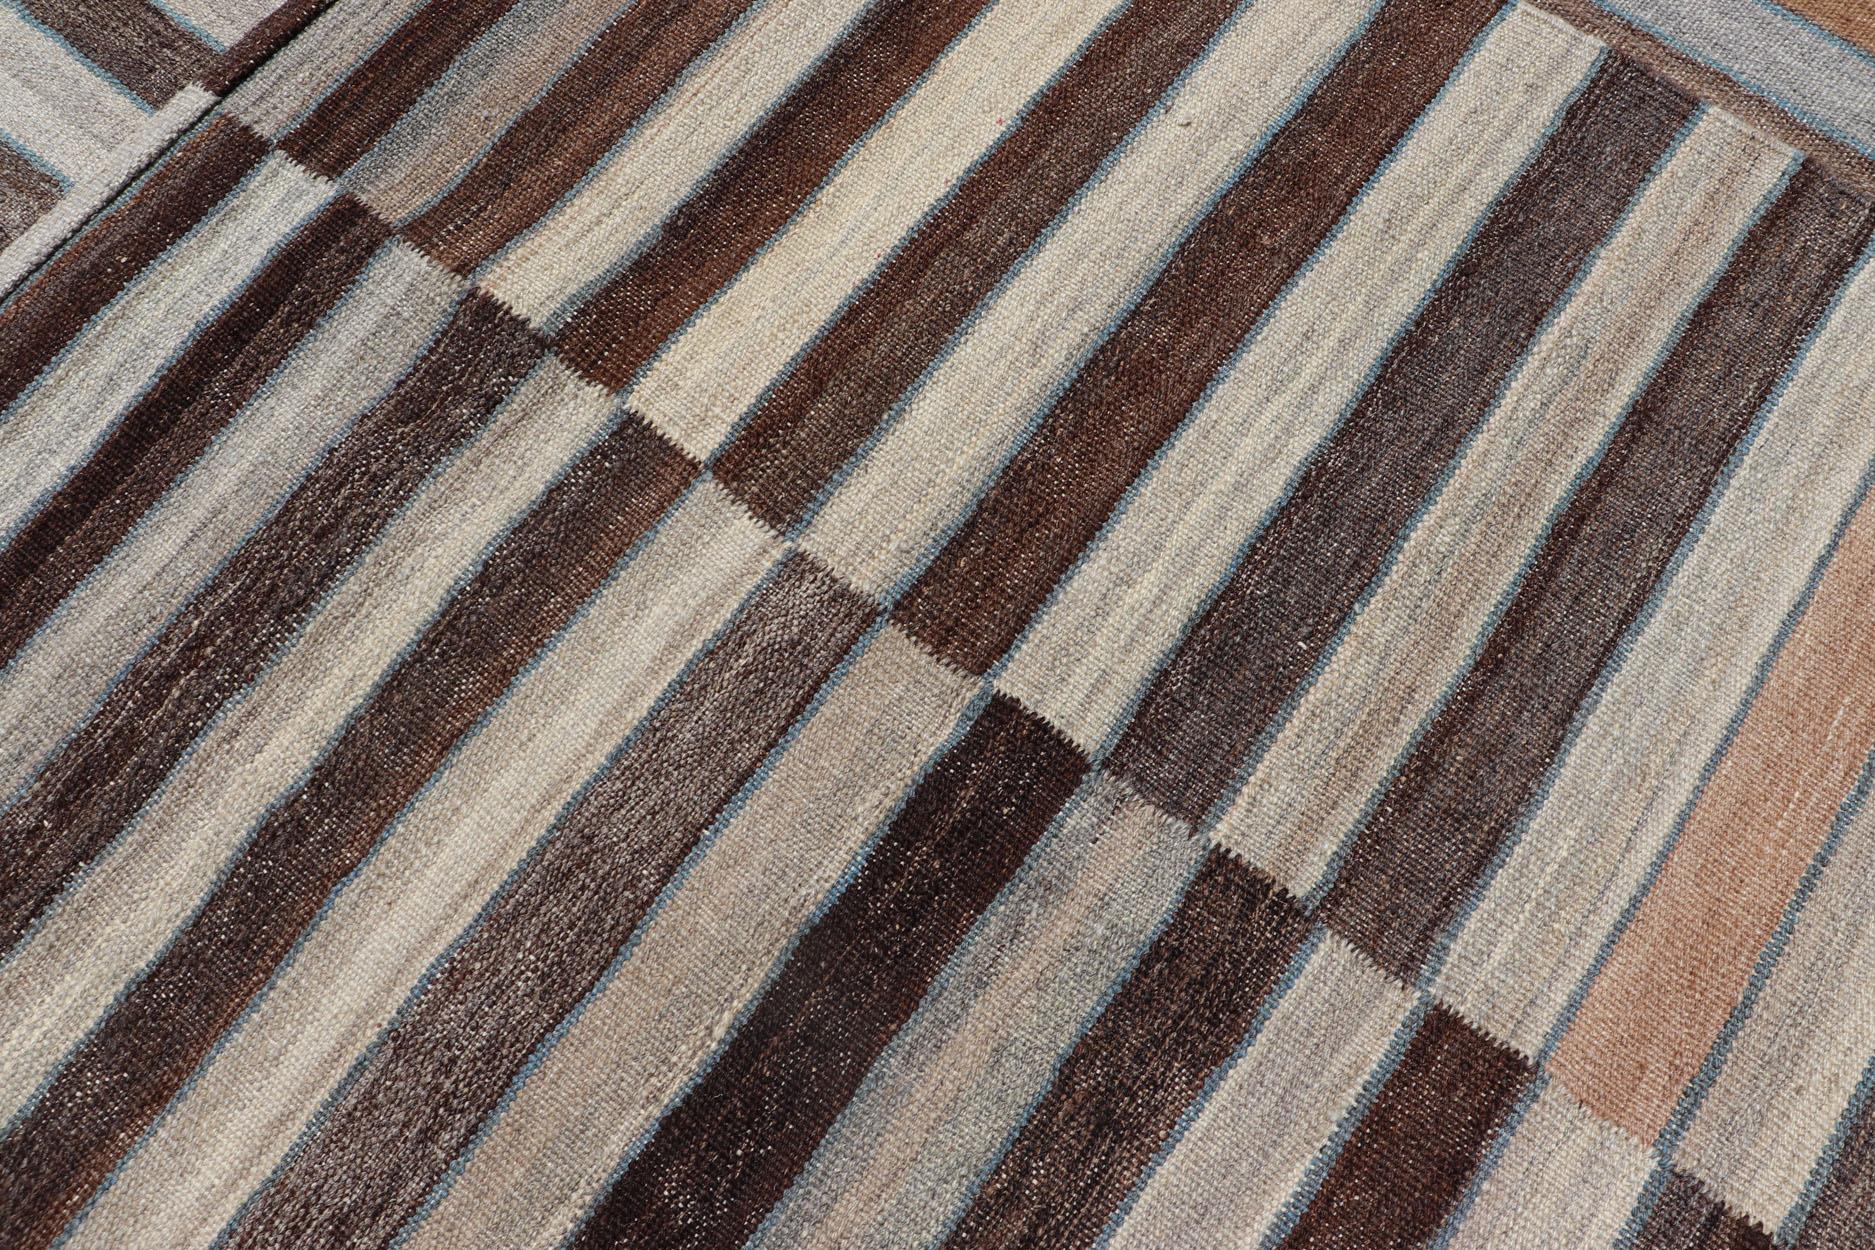 Modern Flat-Weave Kilim Rug in Multi-Panel Striped Design in Earthy Tones For Sale 4